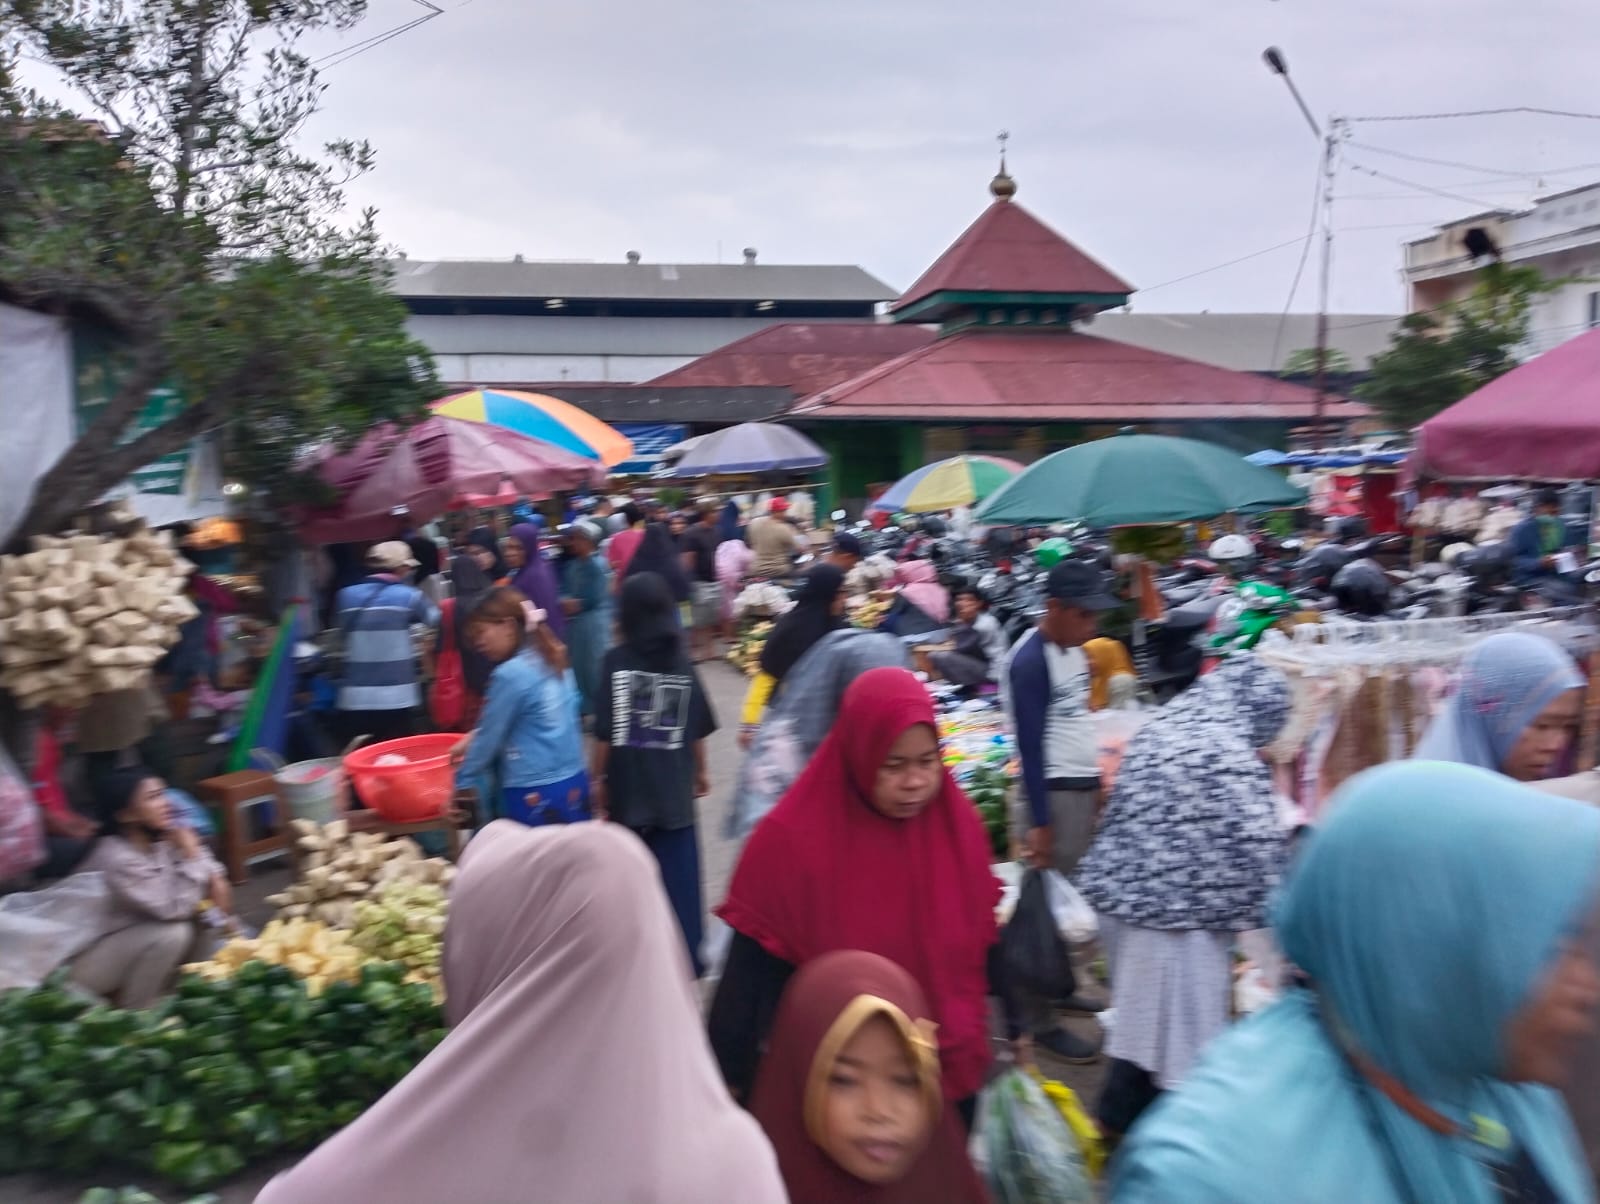 Jelang Lebaran, Pasar Tradisional di Palembang Diserbu Ibu RT